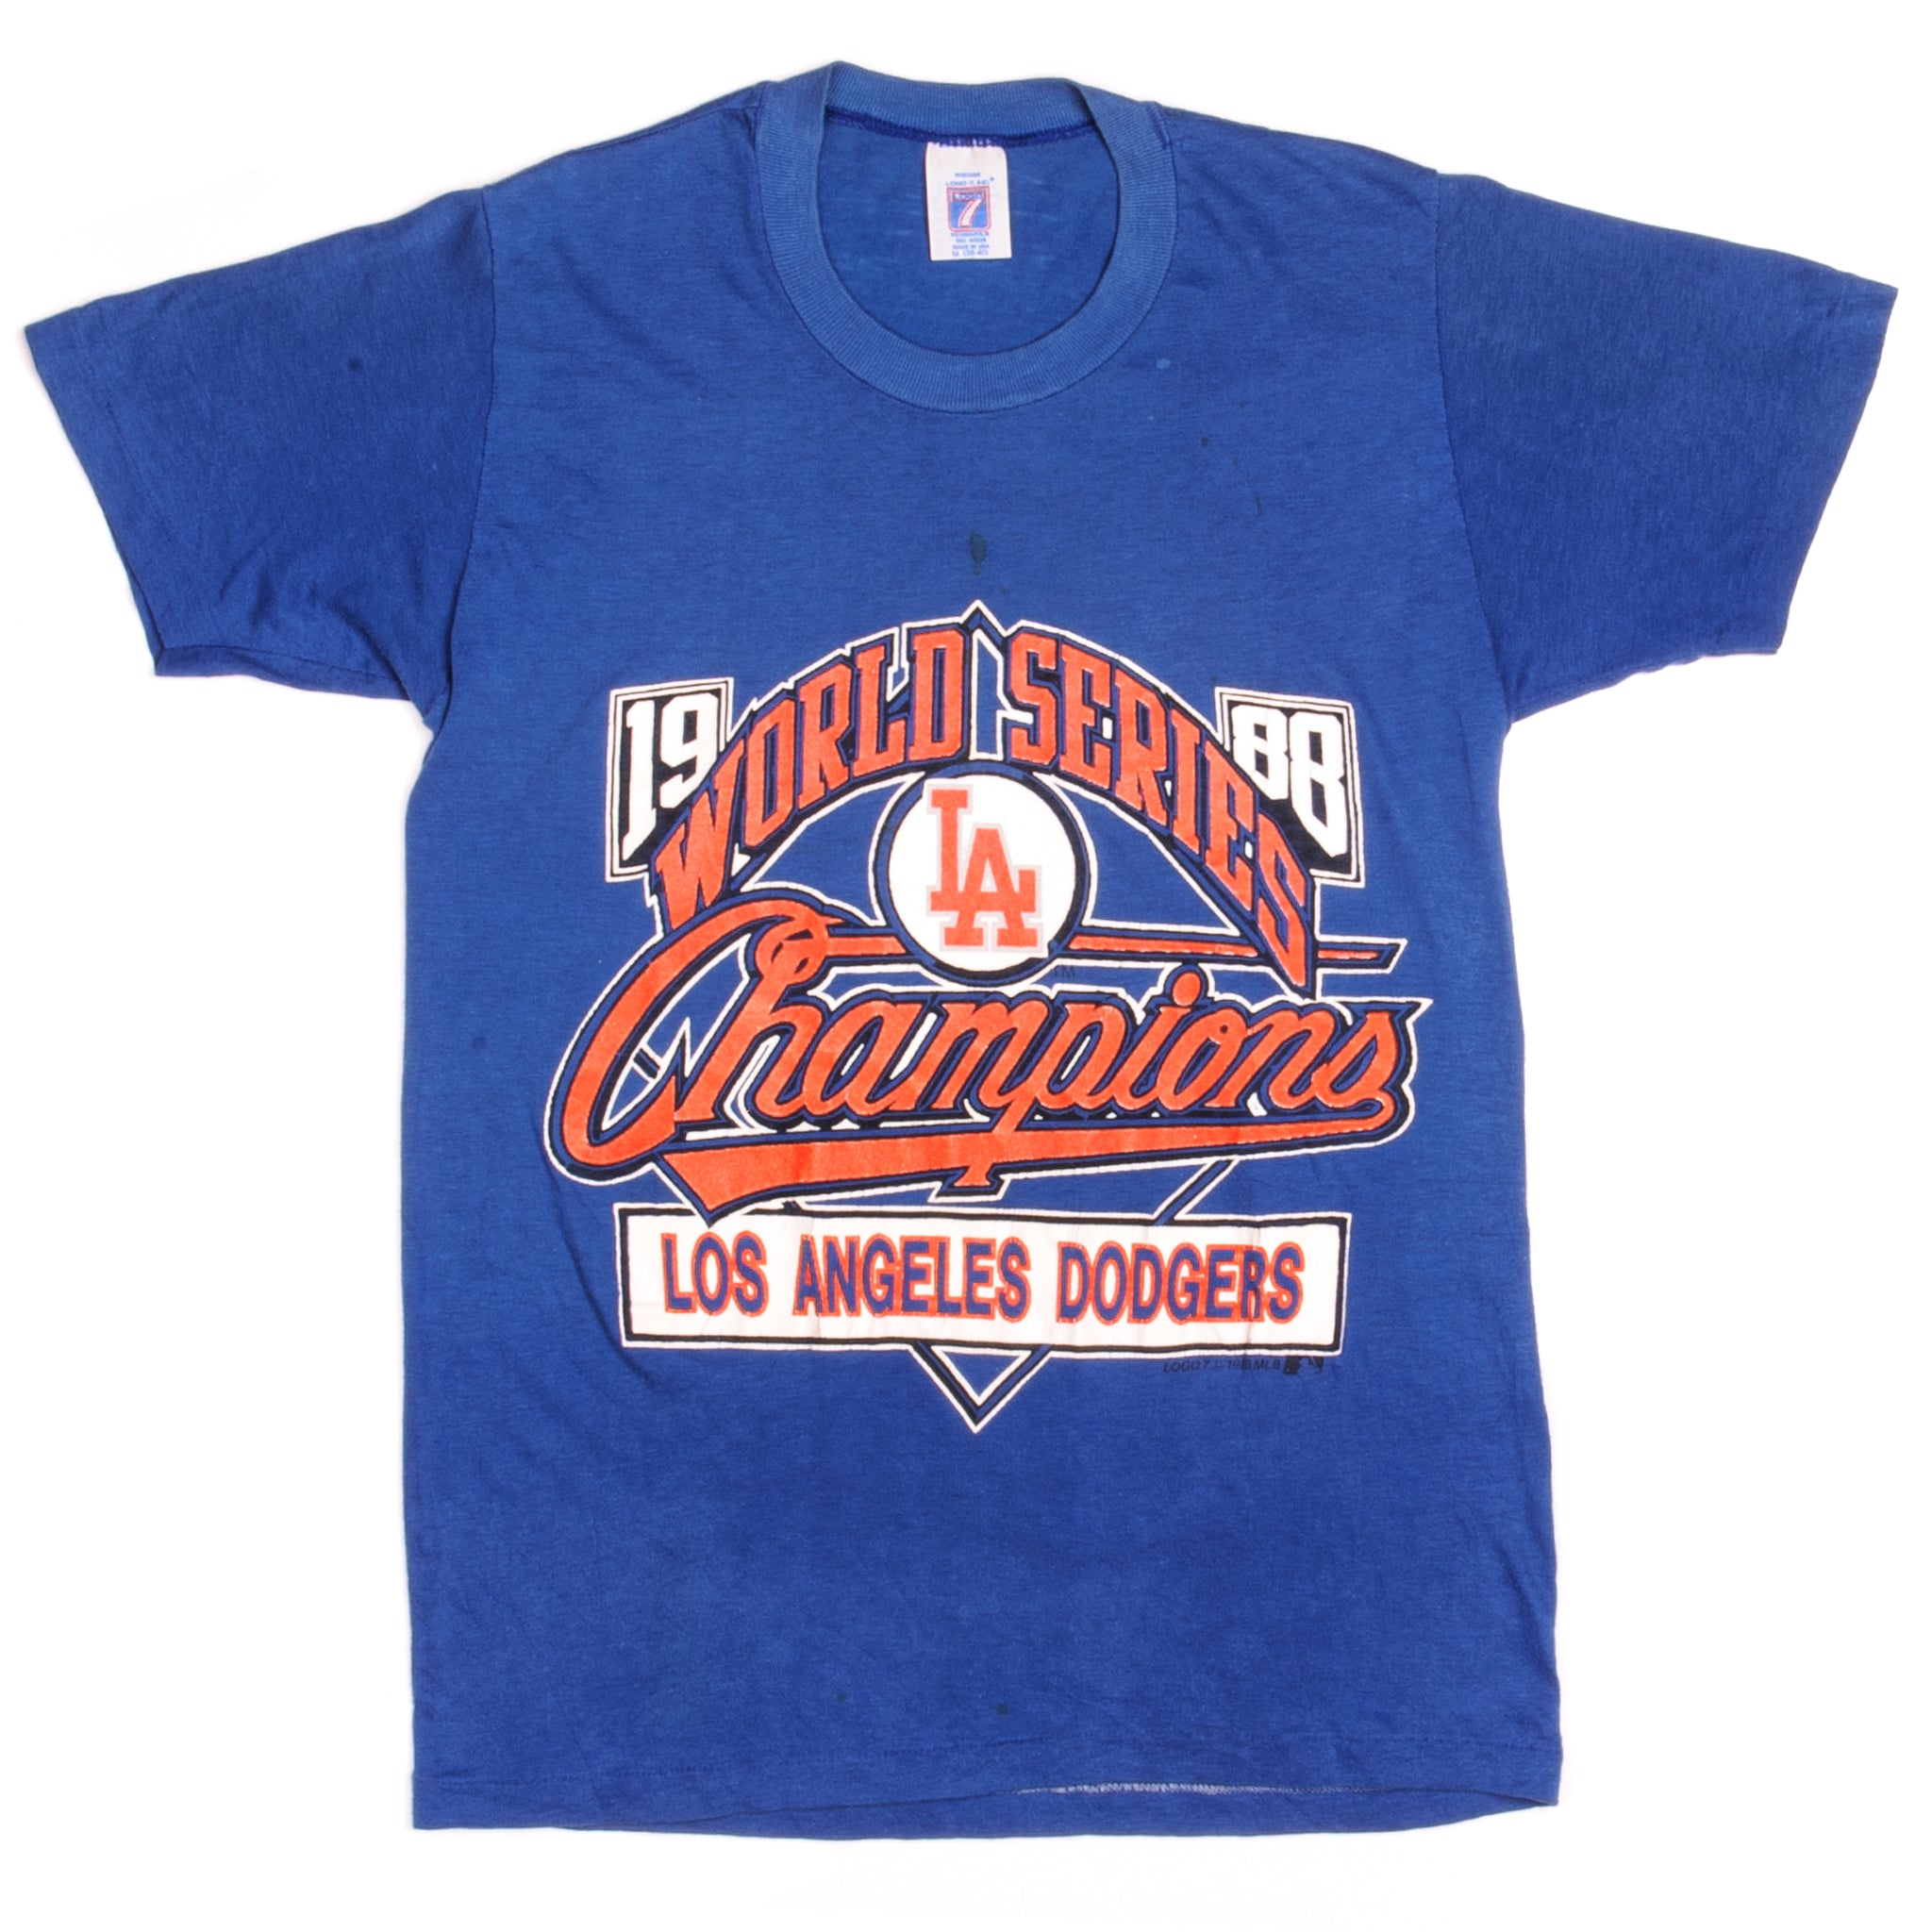 Los Angeles Dodgers 1988 World Series Champions shirt - Dalatshirt